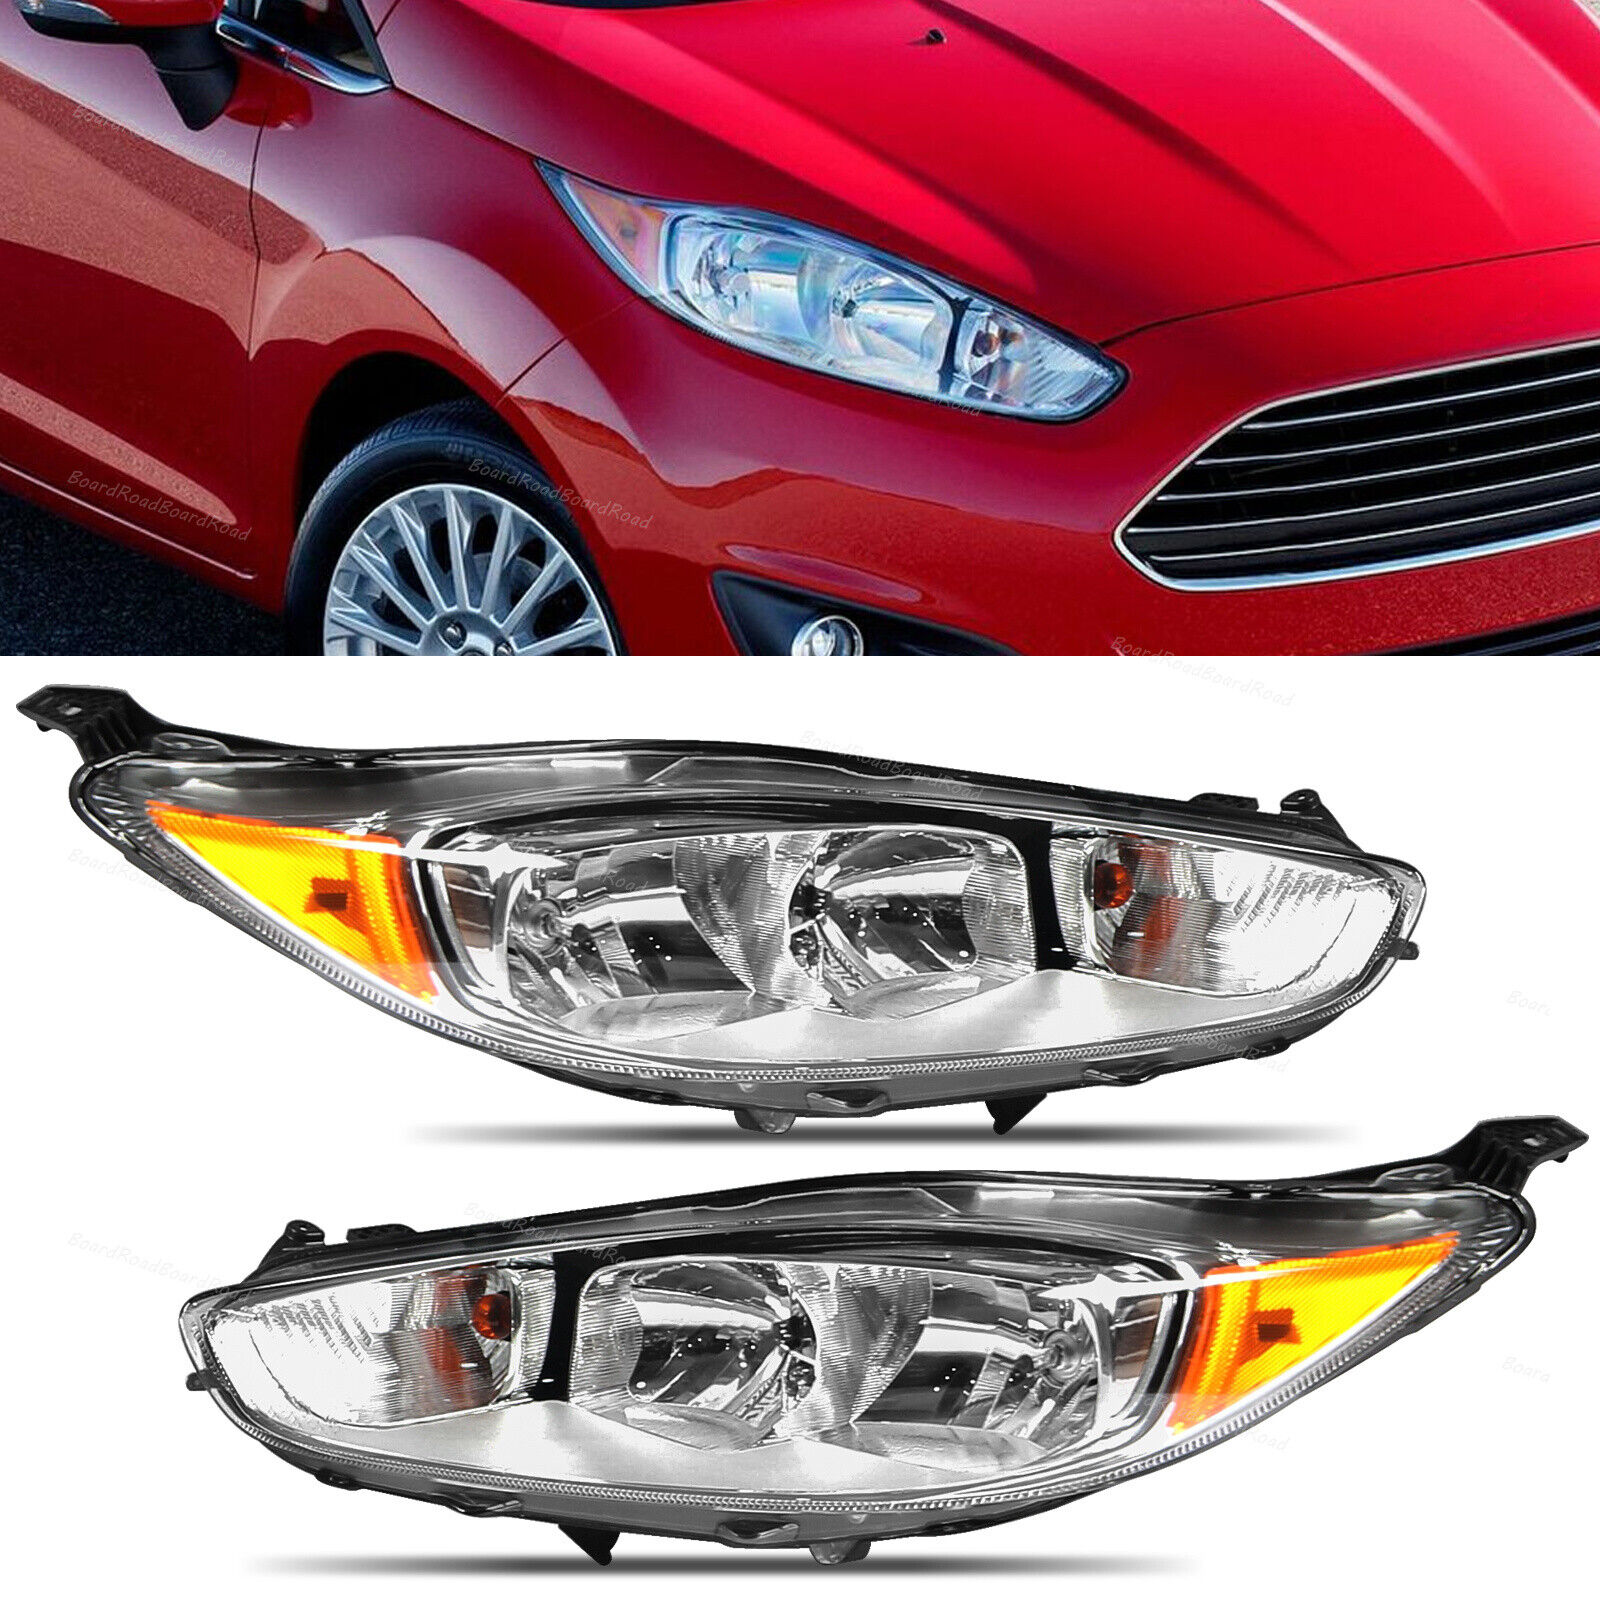 Fits 2014-2017 Ford Fiesta Chrome Headlight Headlamp Replacement Pair LH+RH